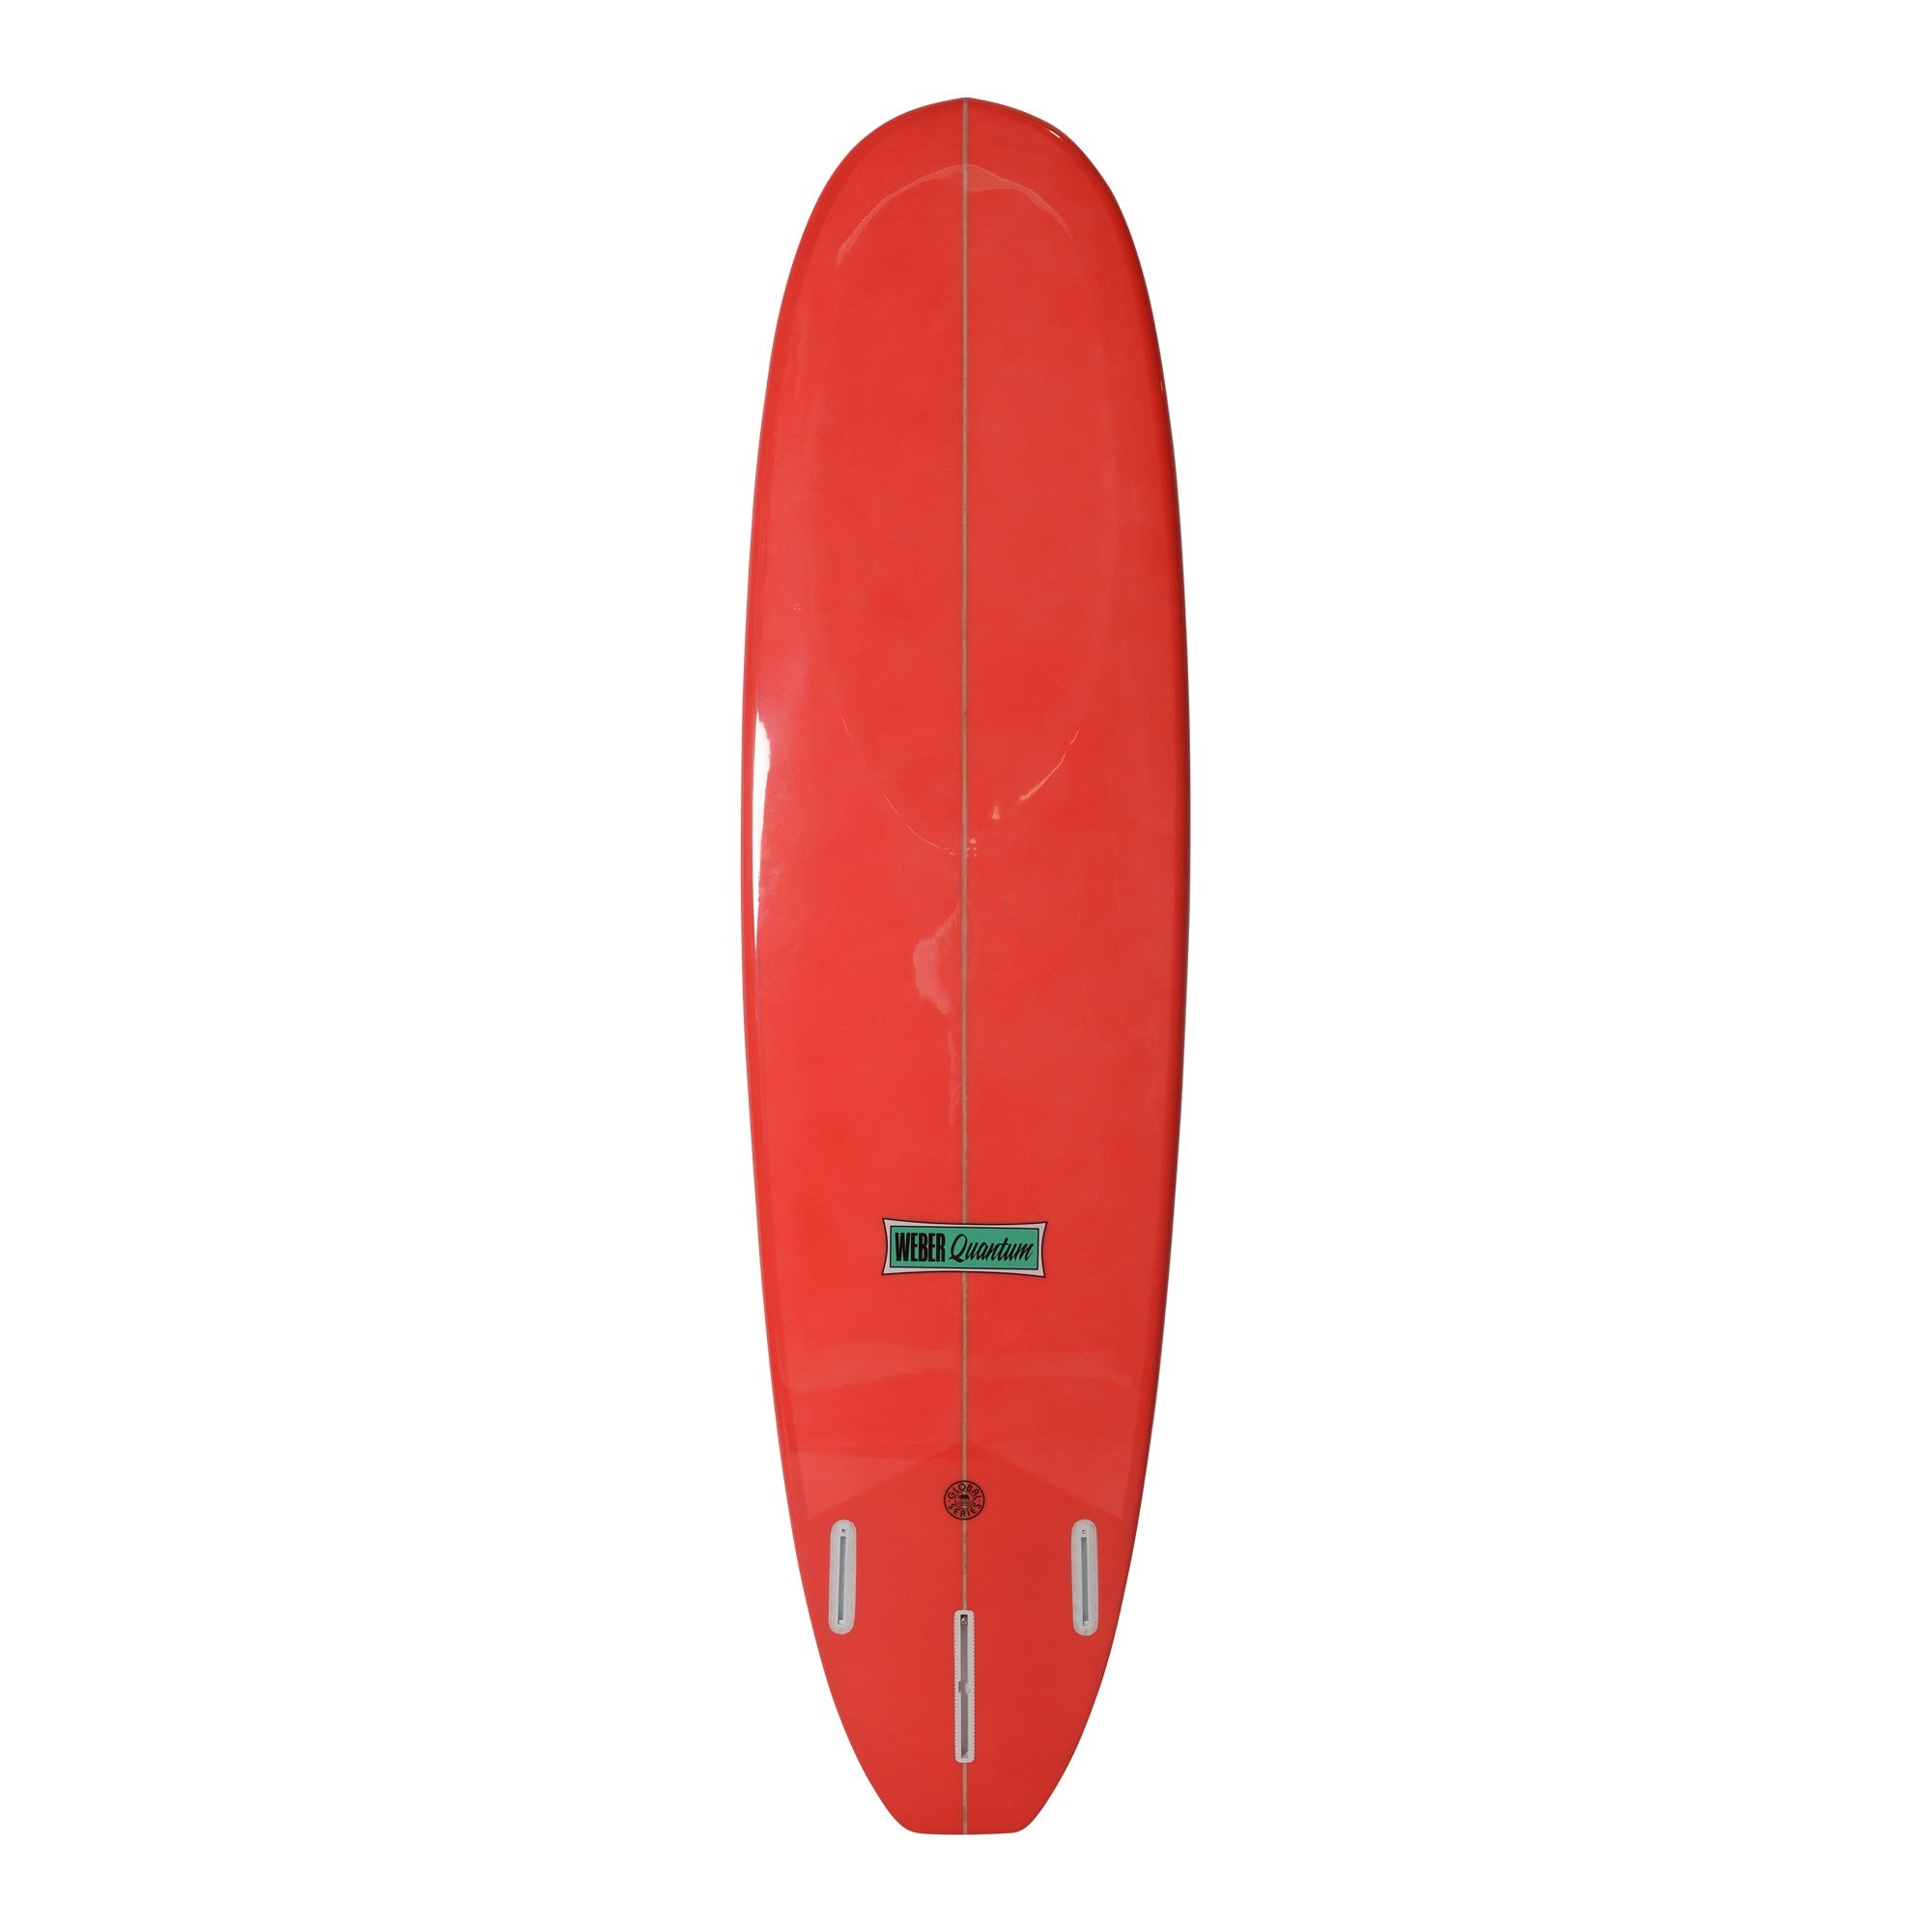 WEBER SURFBOARDS - Quantum 7'2 - Red